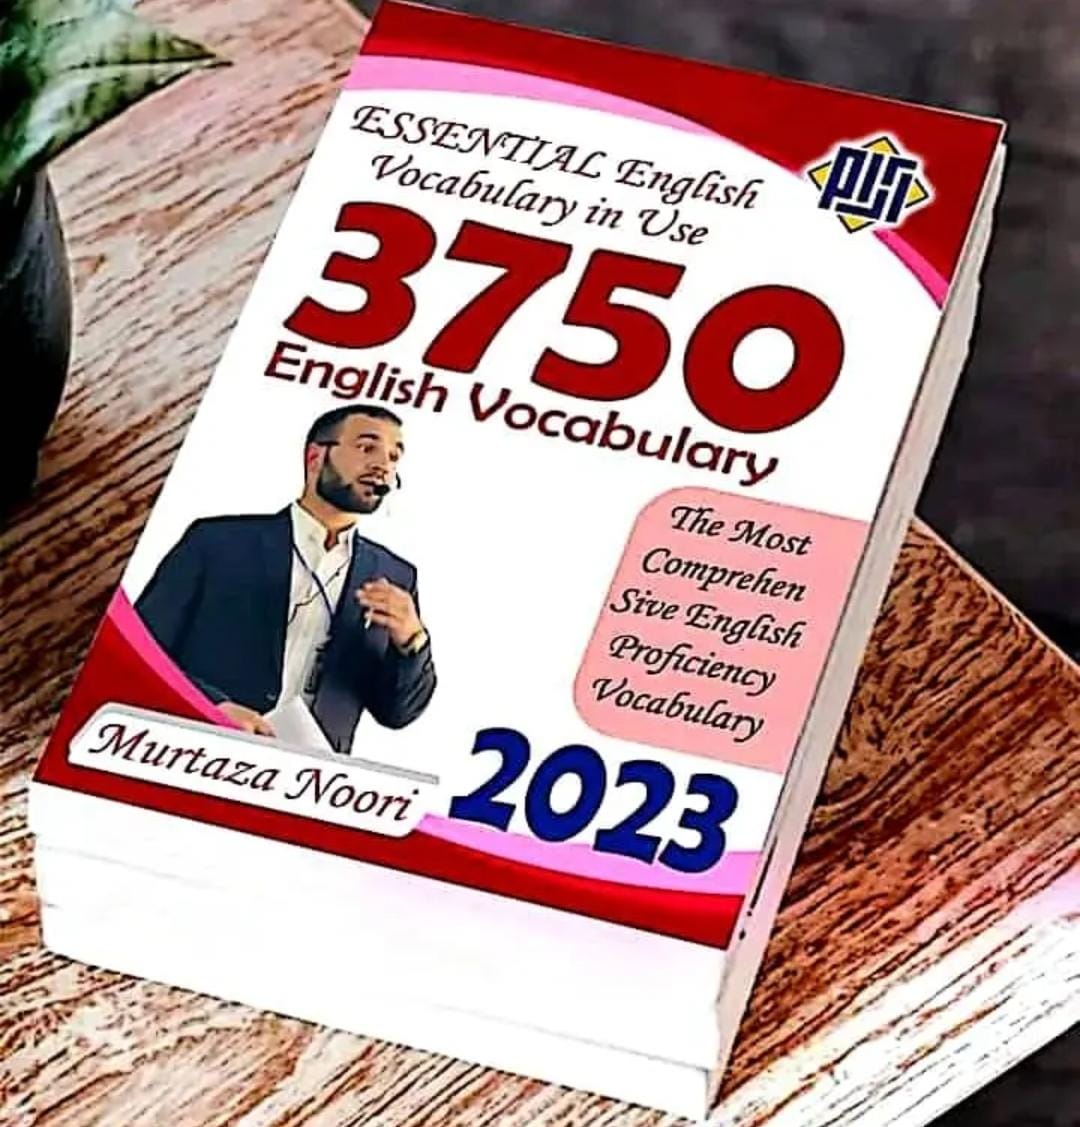 3750 English vocabulary